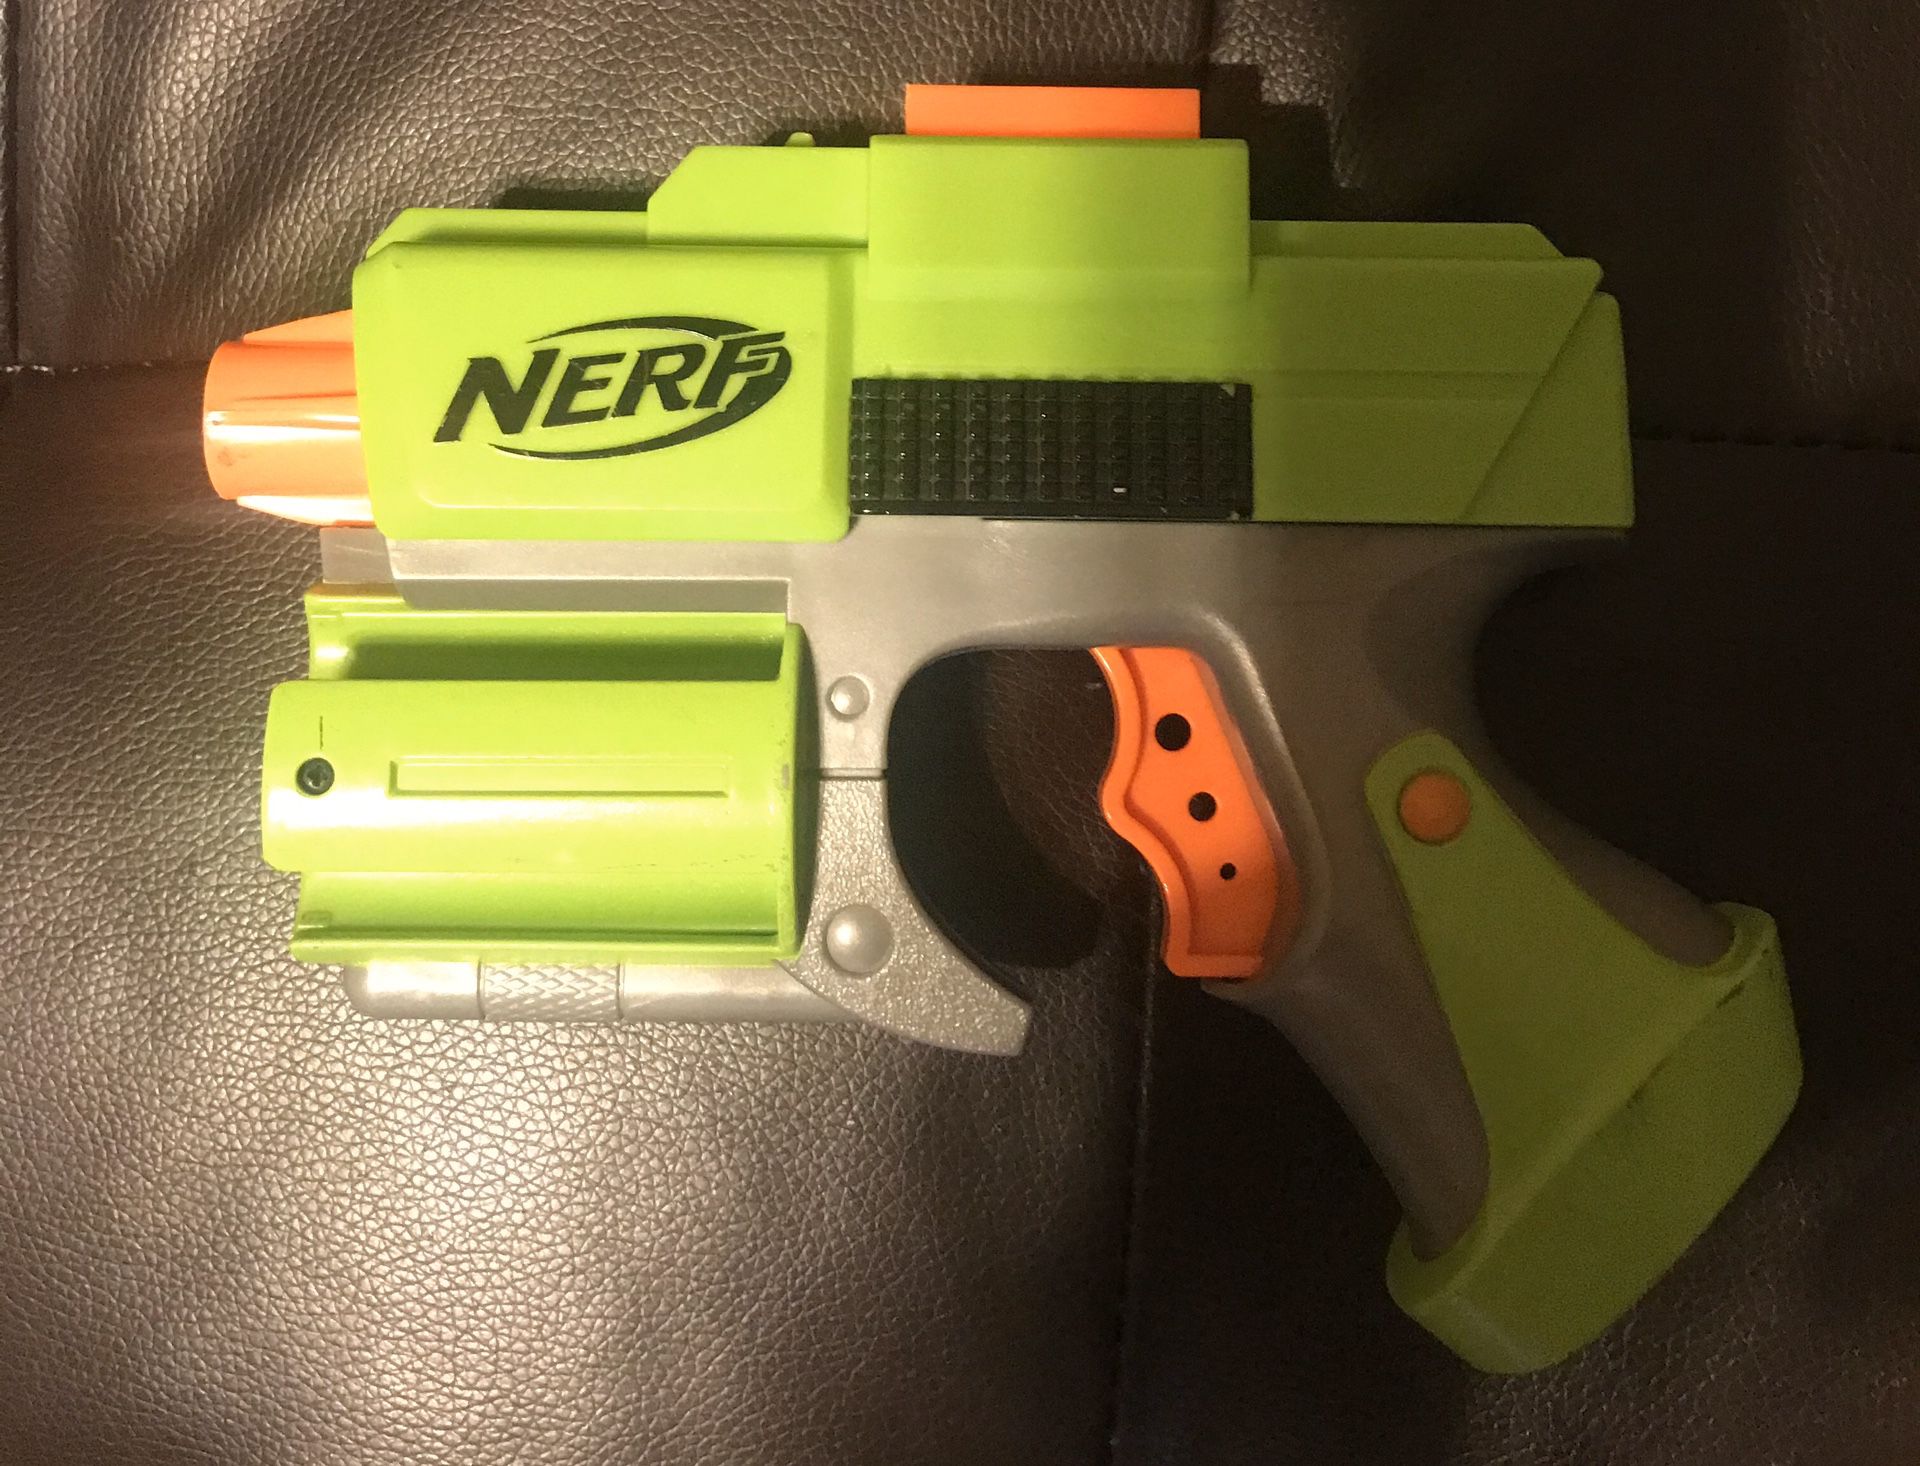 Nerf gun lot